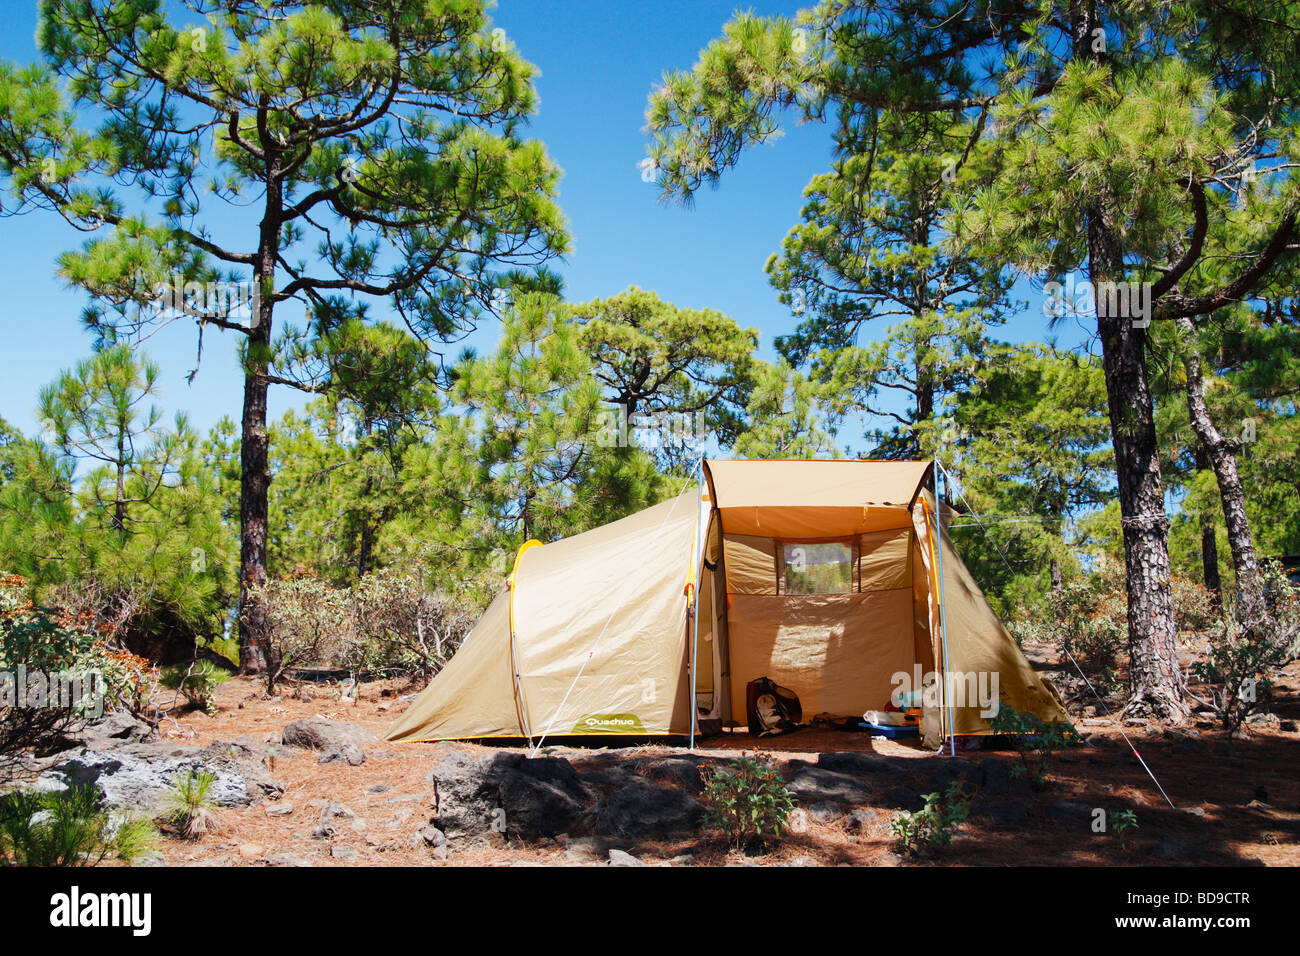 Camping à 1400m dans la forêt de pins de Gran Canaria dans les îles  canaries Photo Stock - Alamy